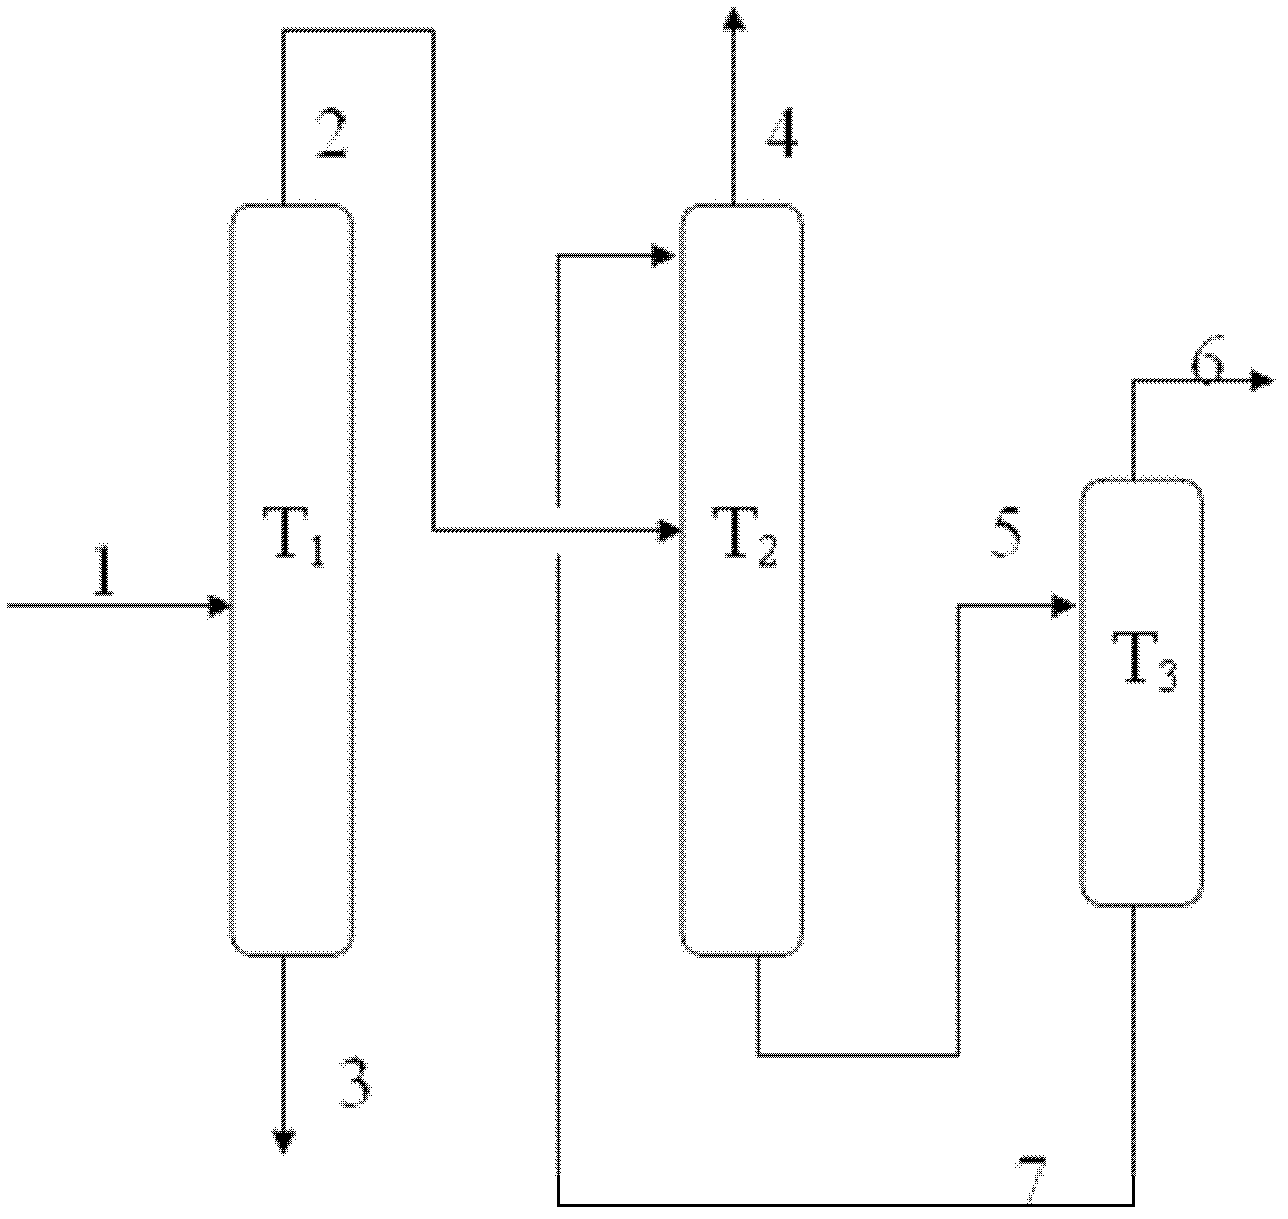 Method for separating mesitylene via extractive distillation